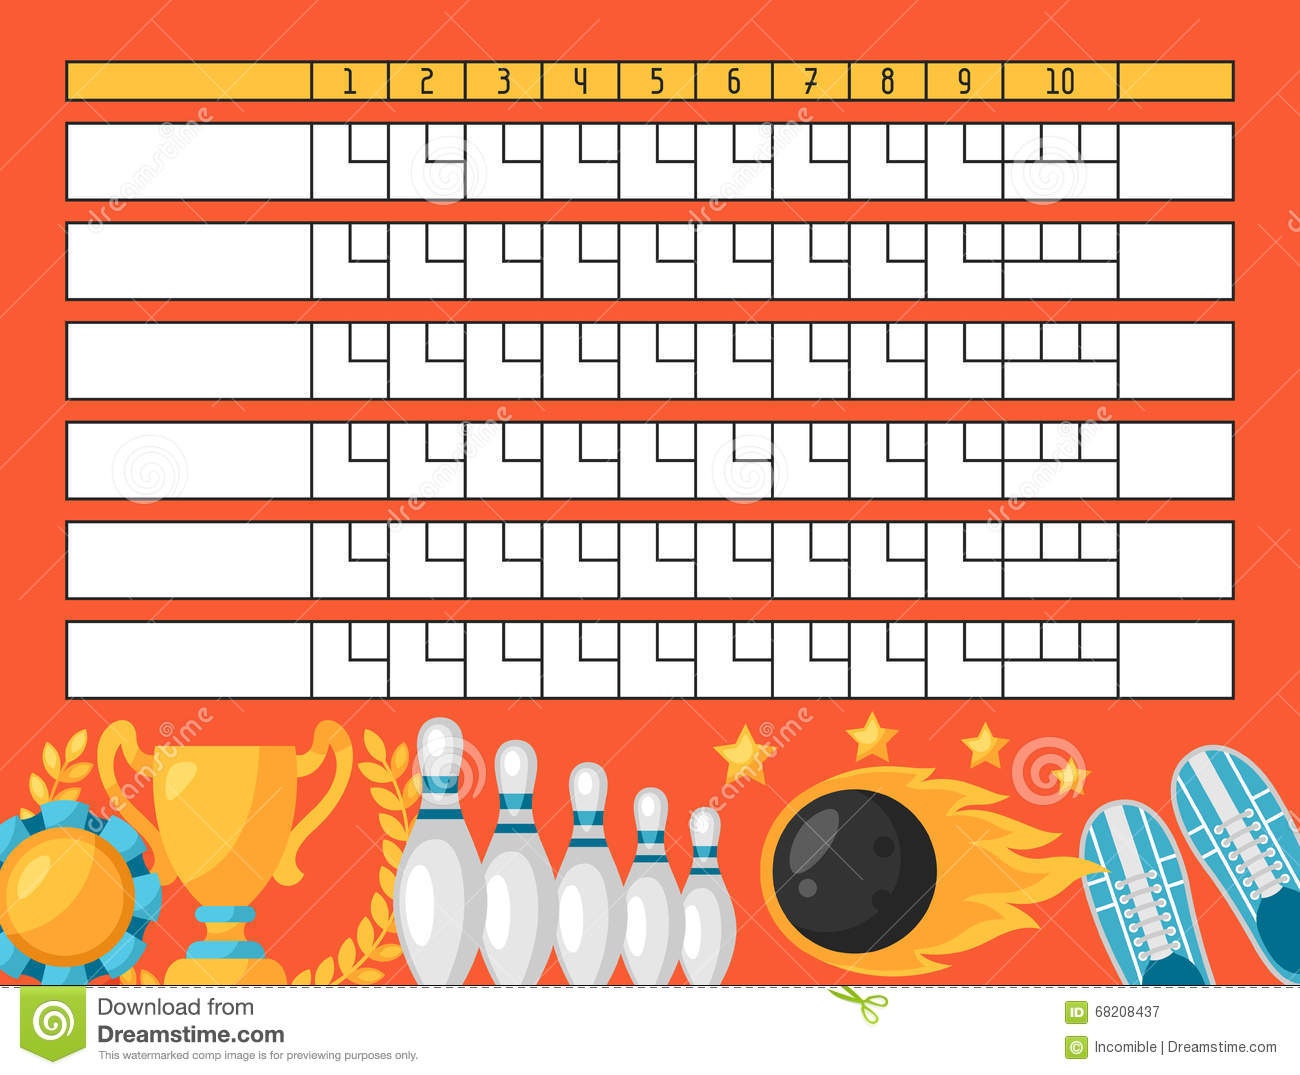 Download Free Printable Bowling Score Sheets | Free Printable